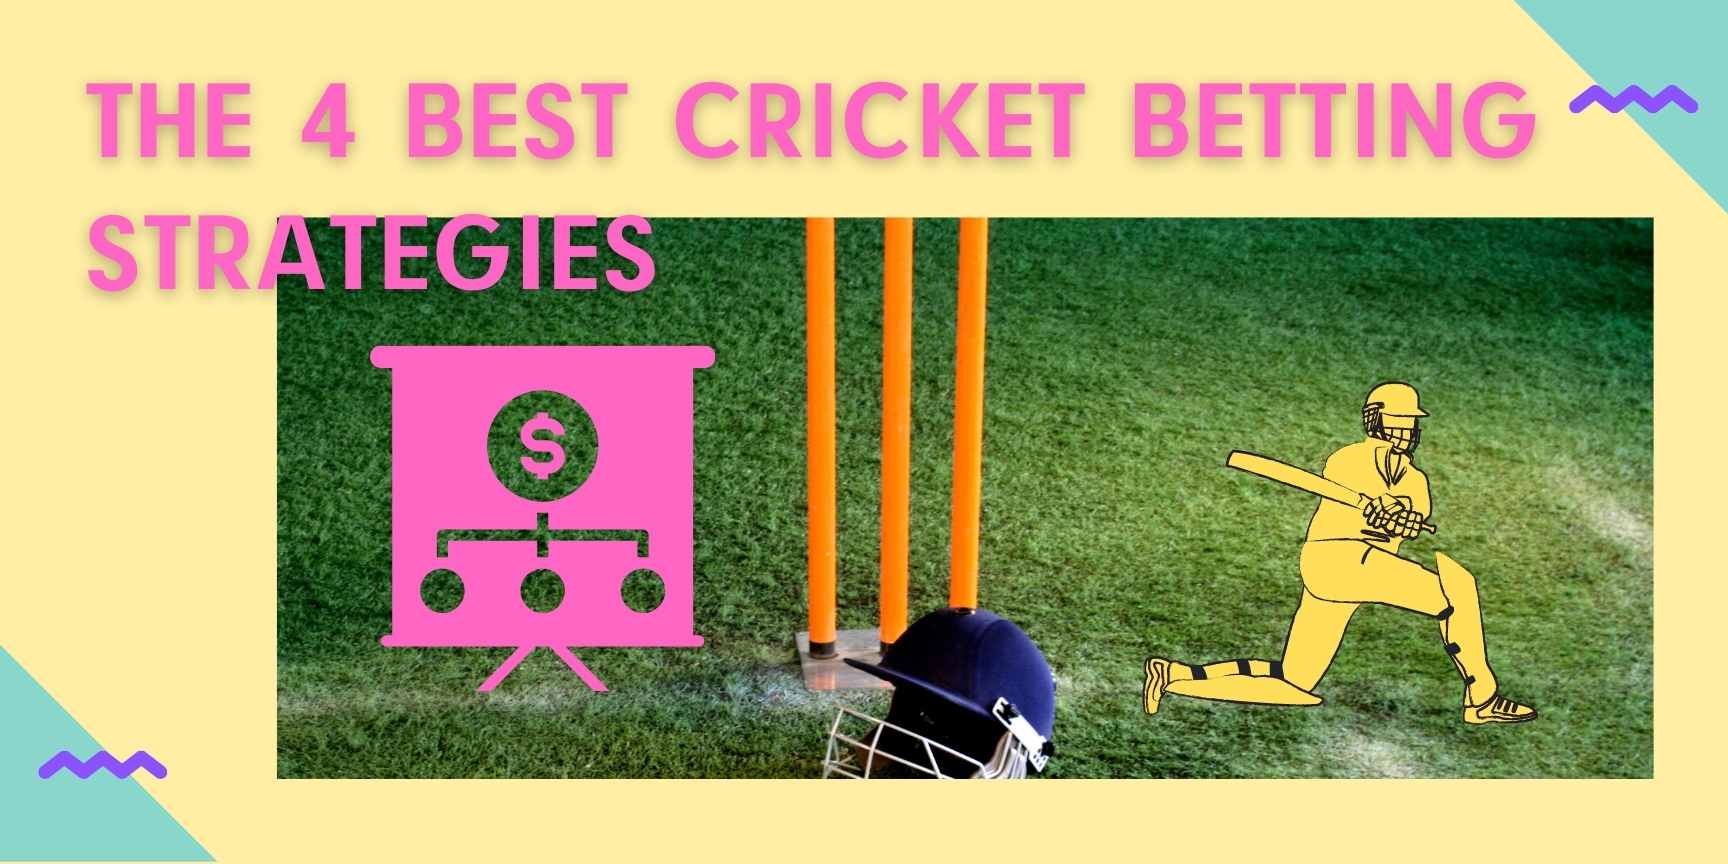 The 4 best cricket betting strategies